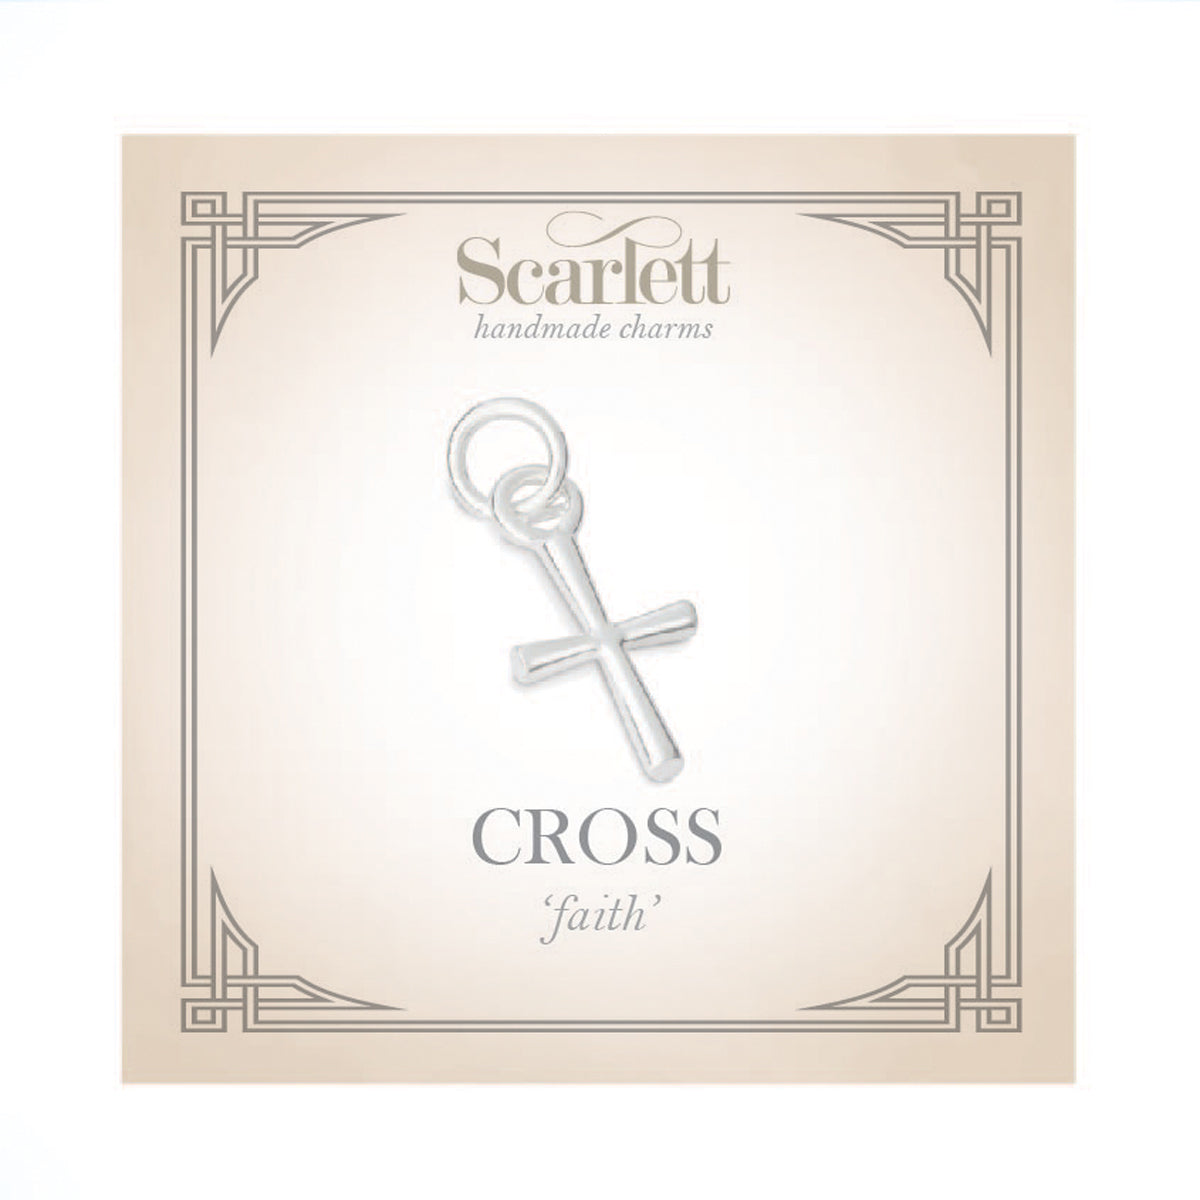 Silver cross charm necklace or bracelet Christening gift from Scarlett Jewellery UK